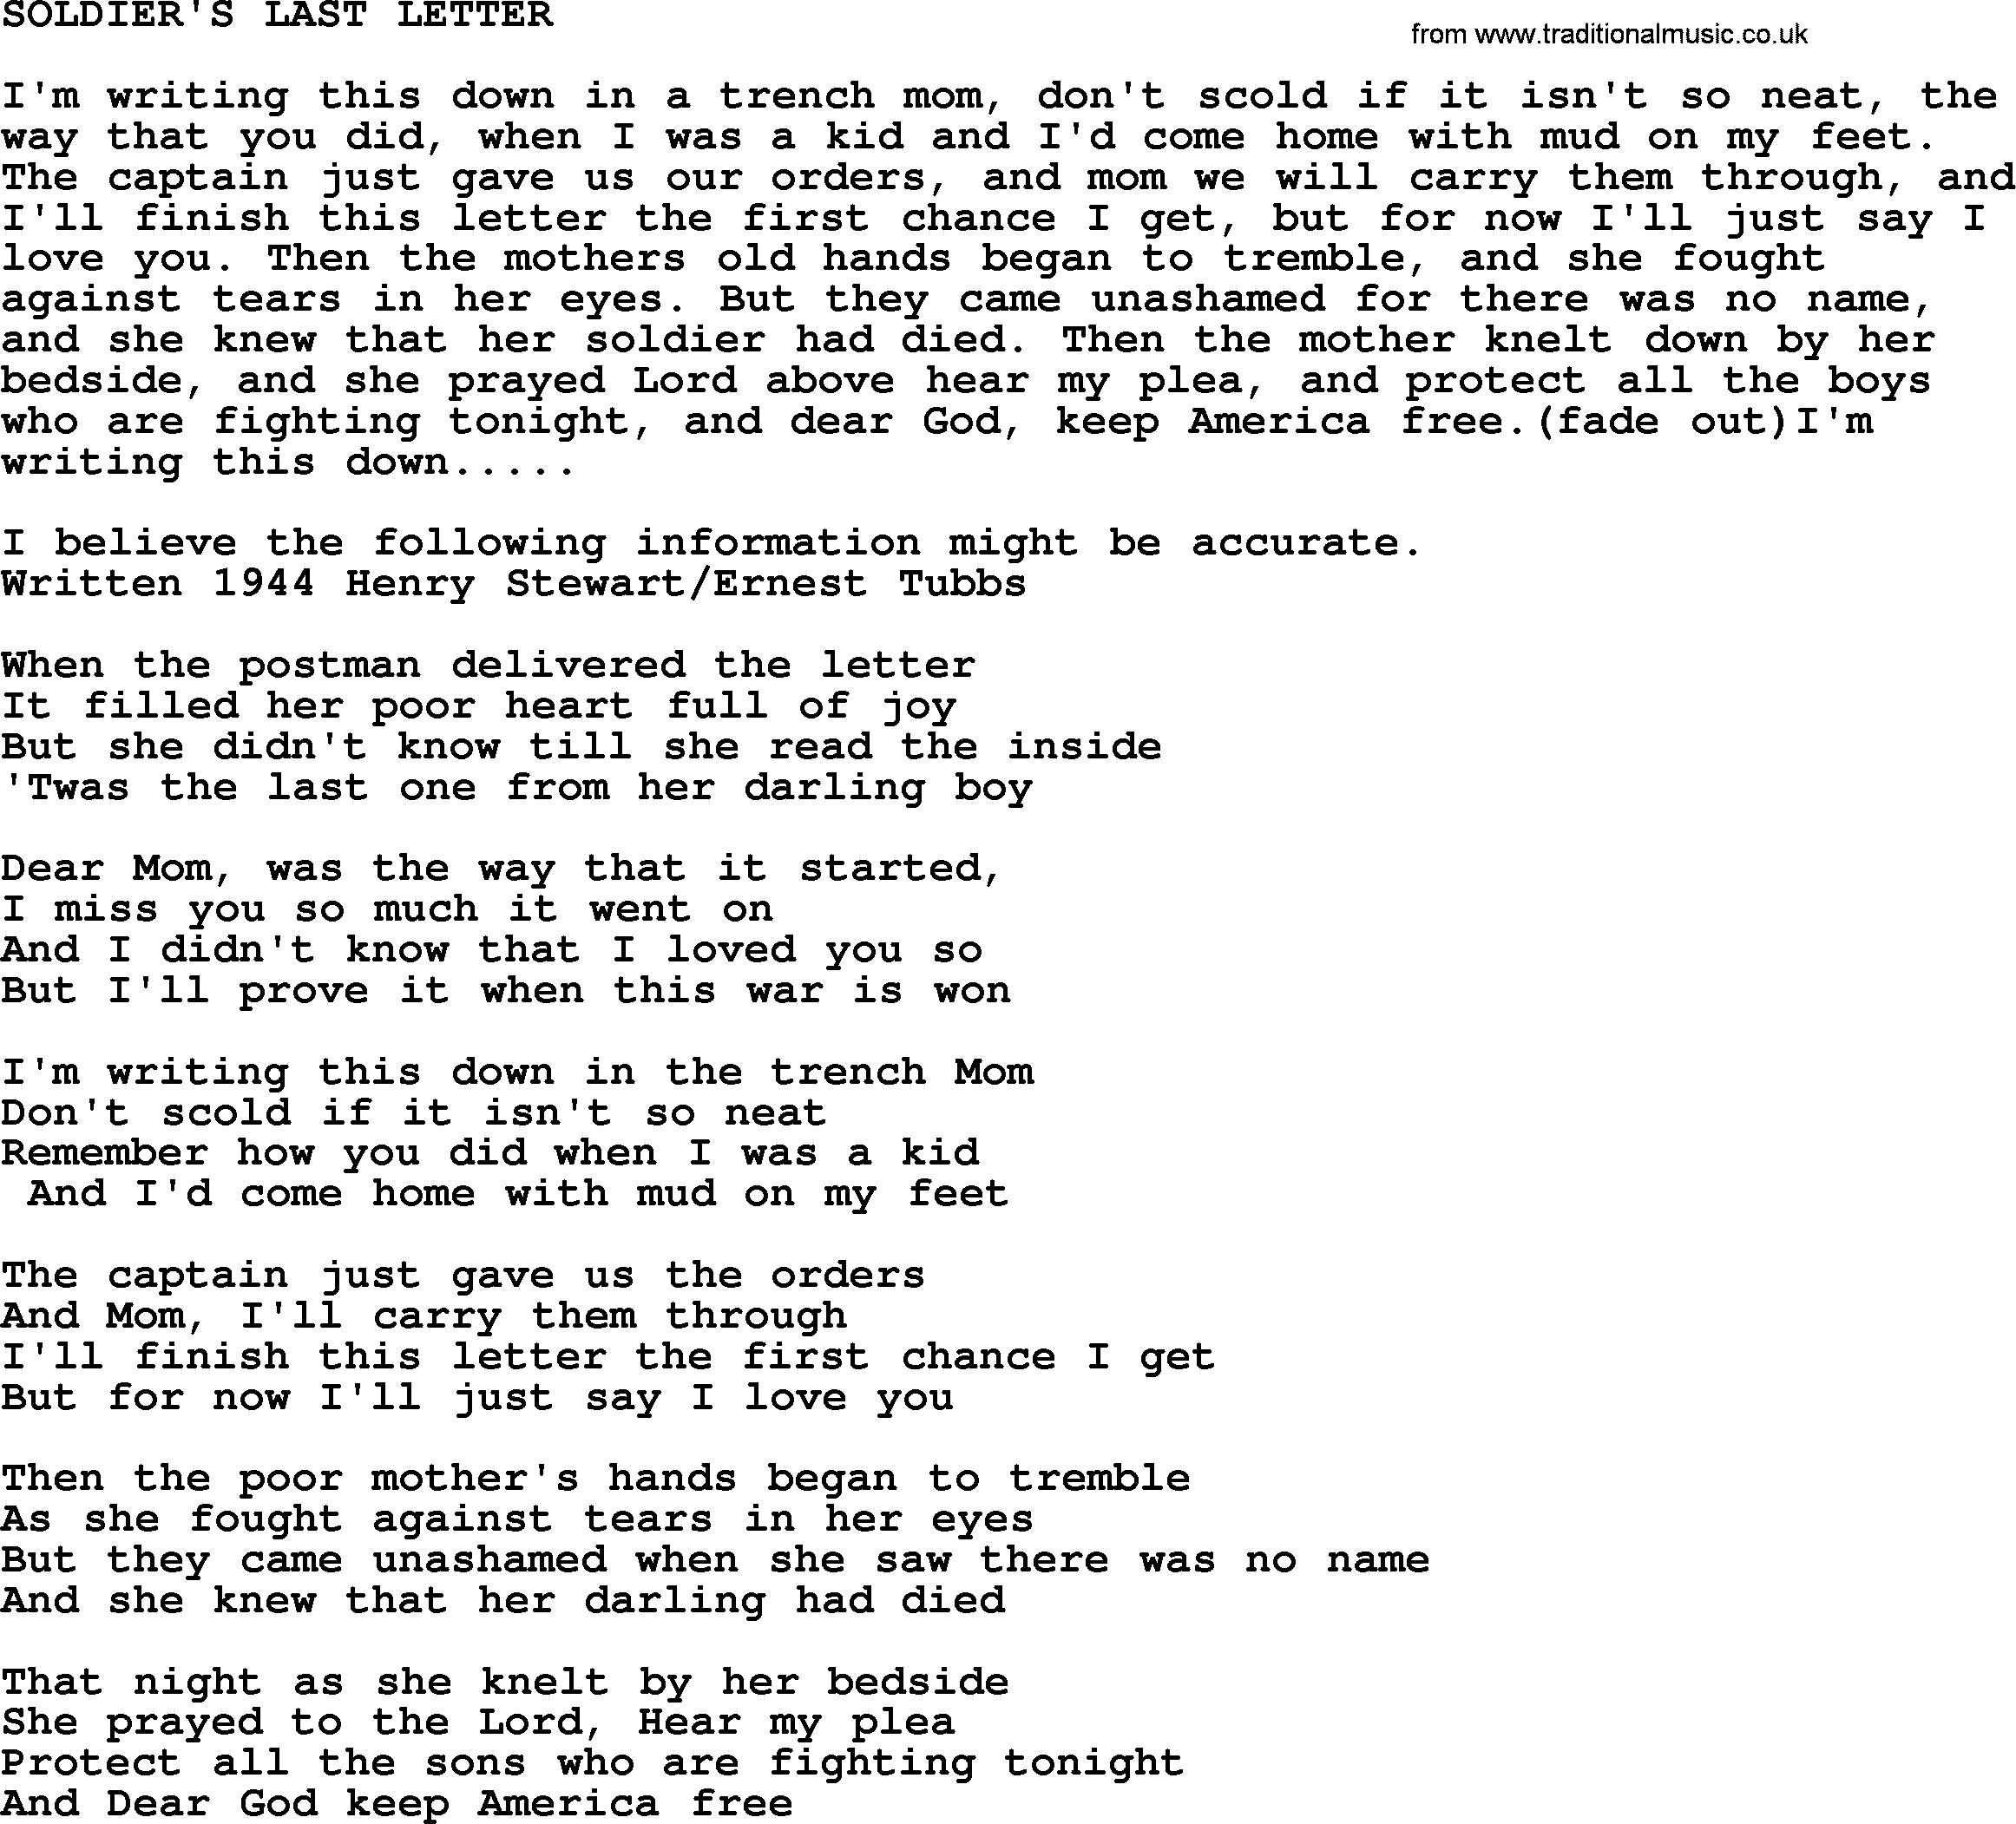 Merle Haggard song: Soldier's Last Letter, lyrics.